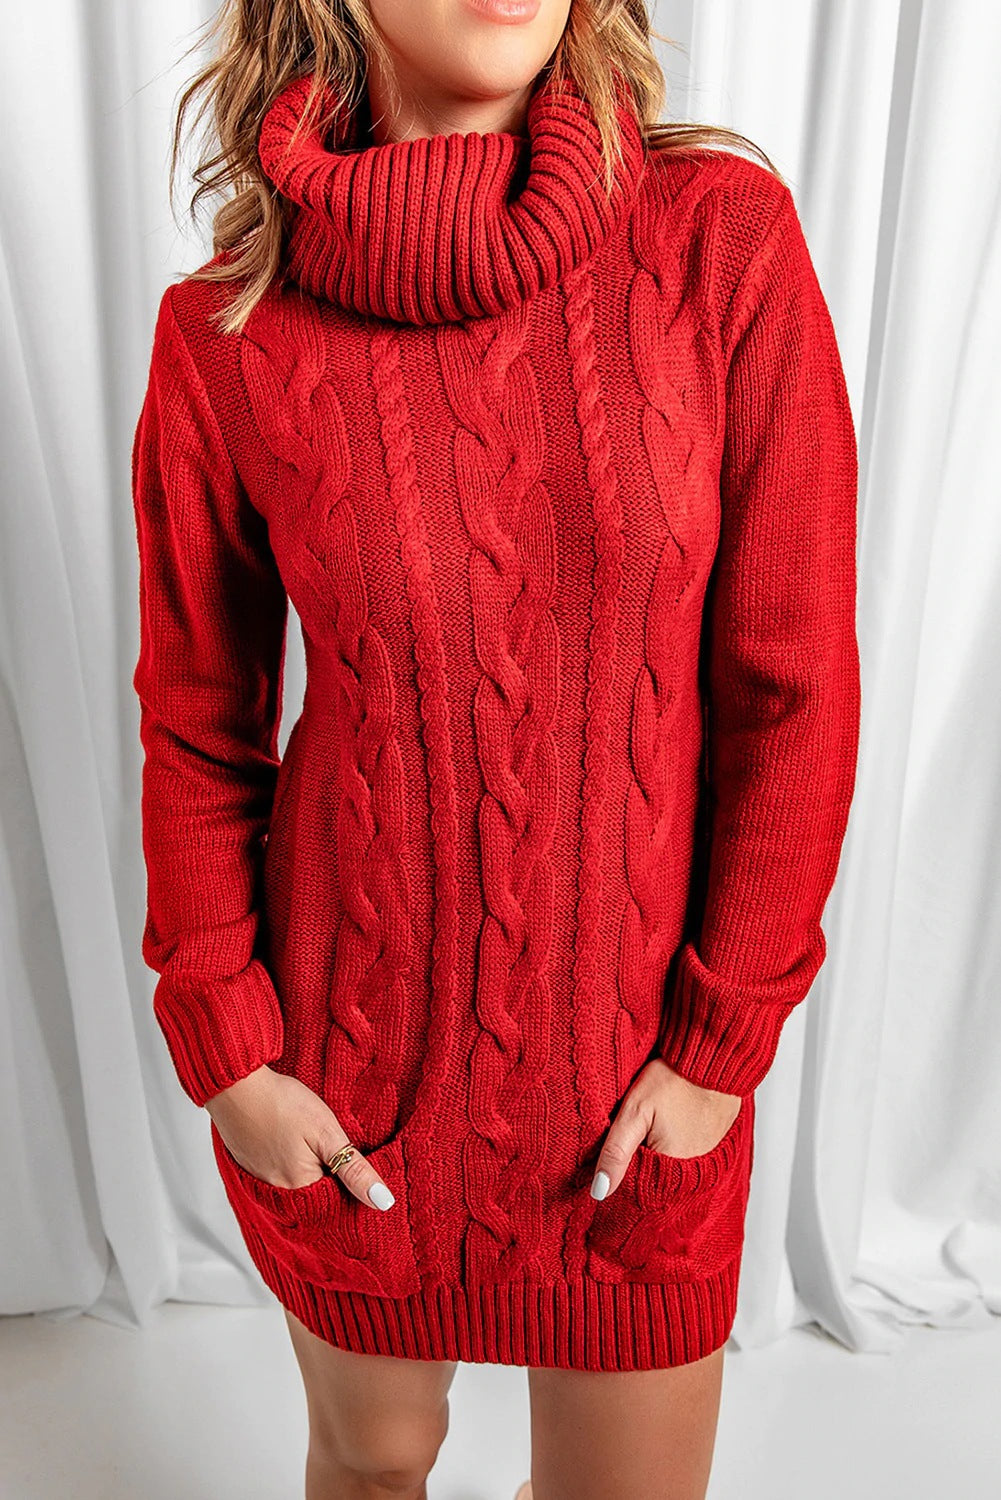 FZ Women's High Neck Knitted Sweater Dress - FZwear